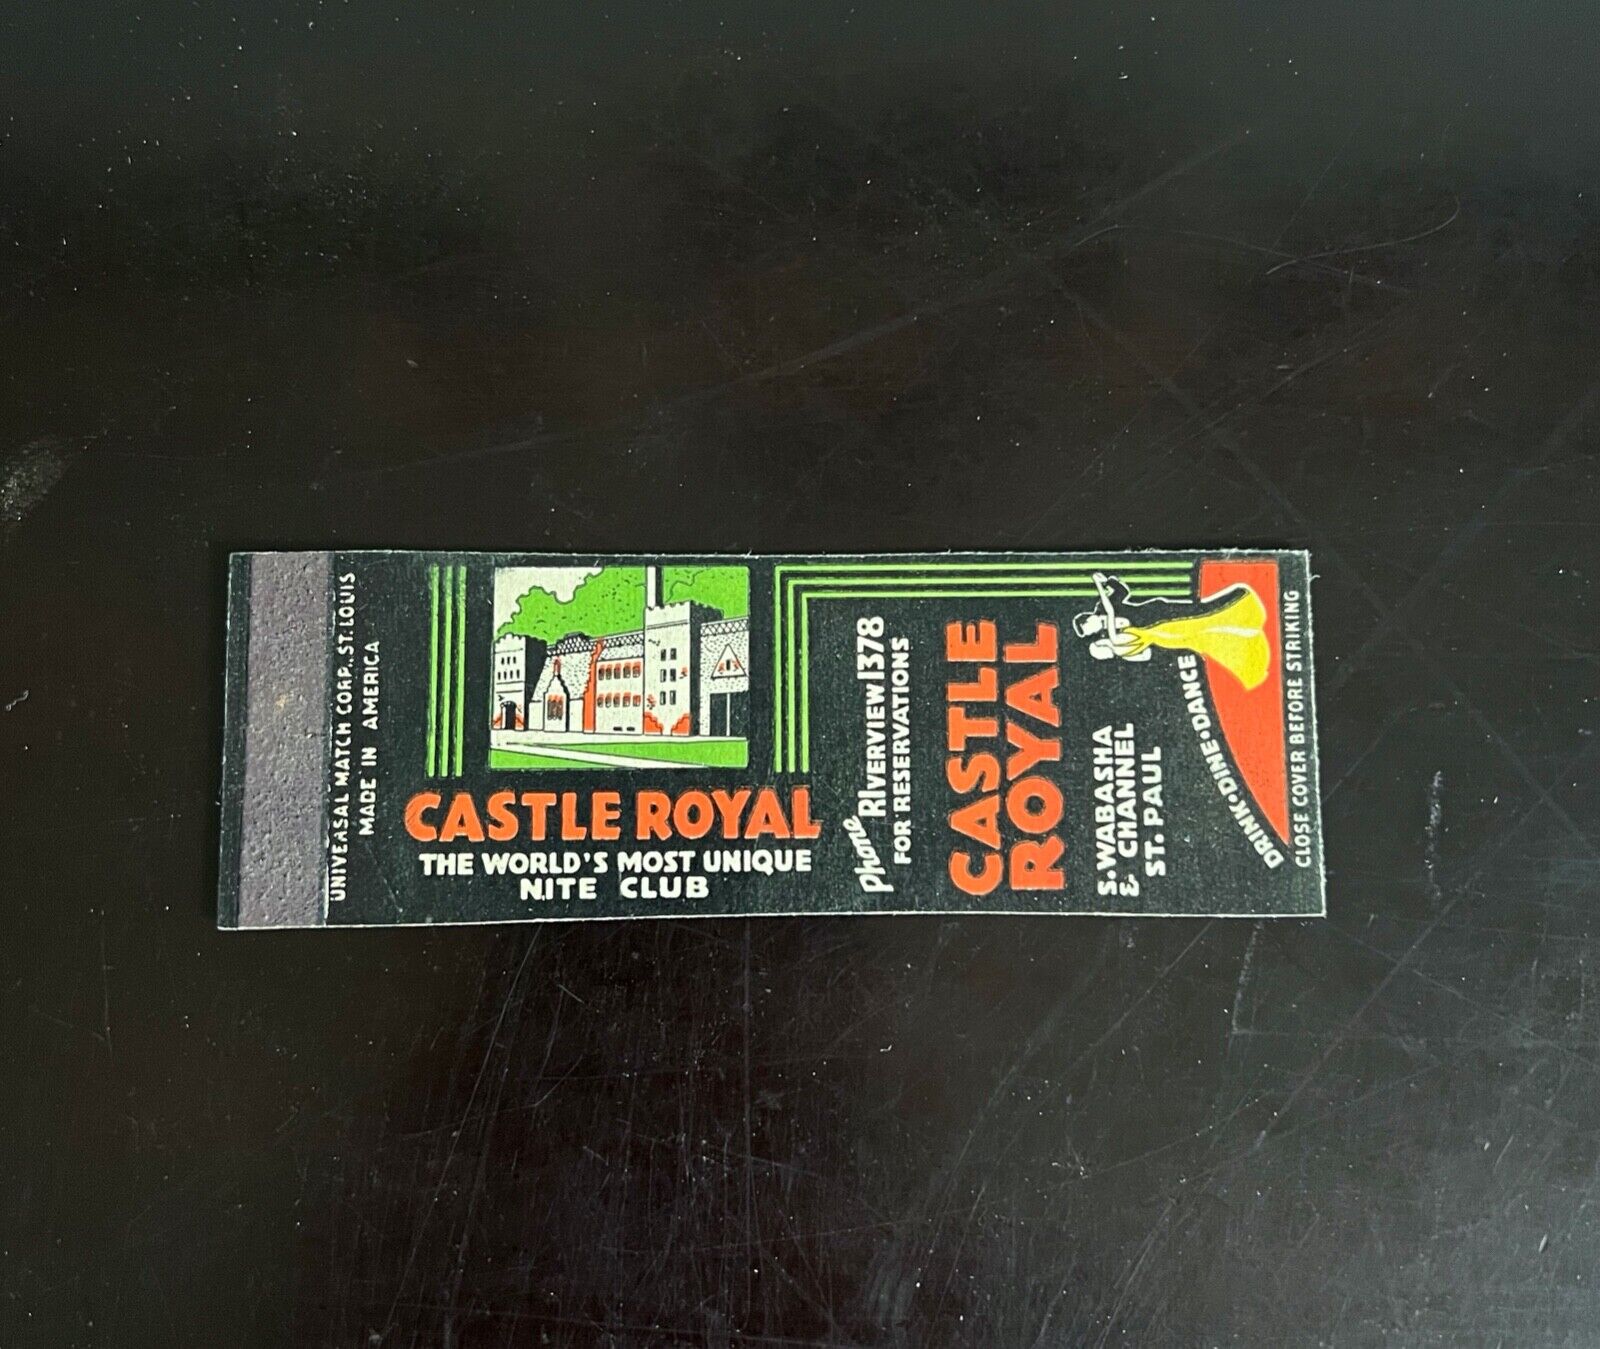 Vintage Sample Matchbook Cover - Castle Royal Nite Club, St. Paul Minnesota